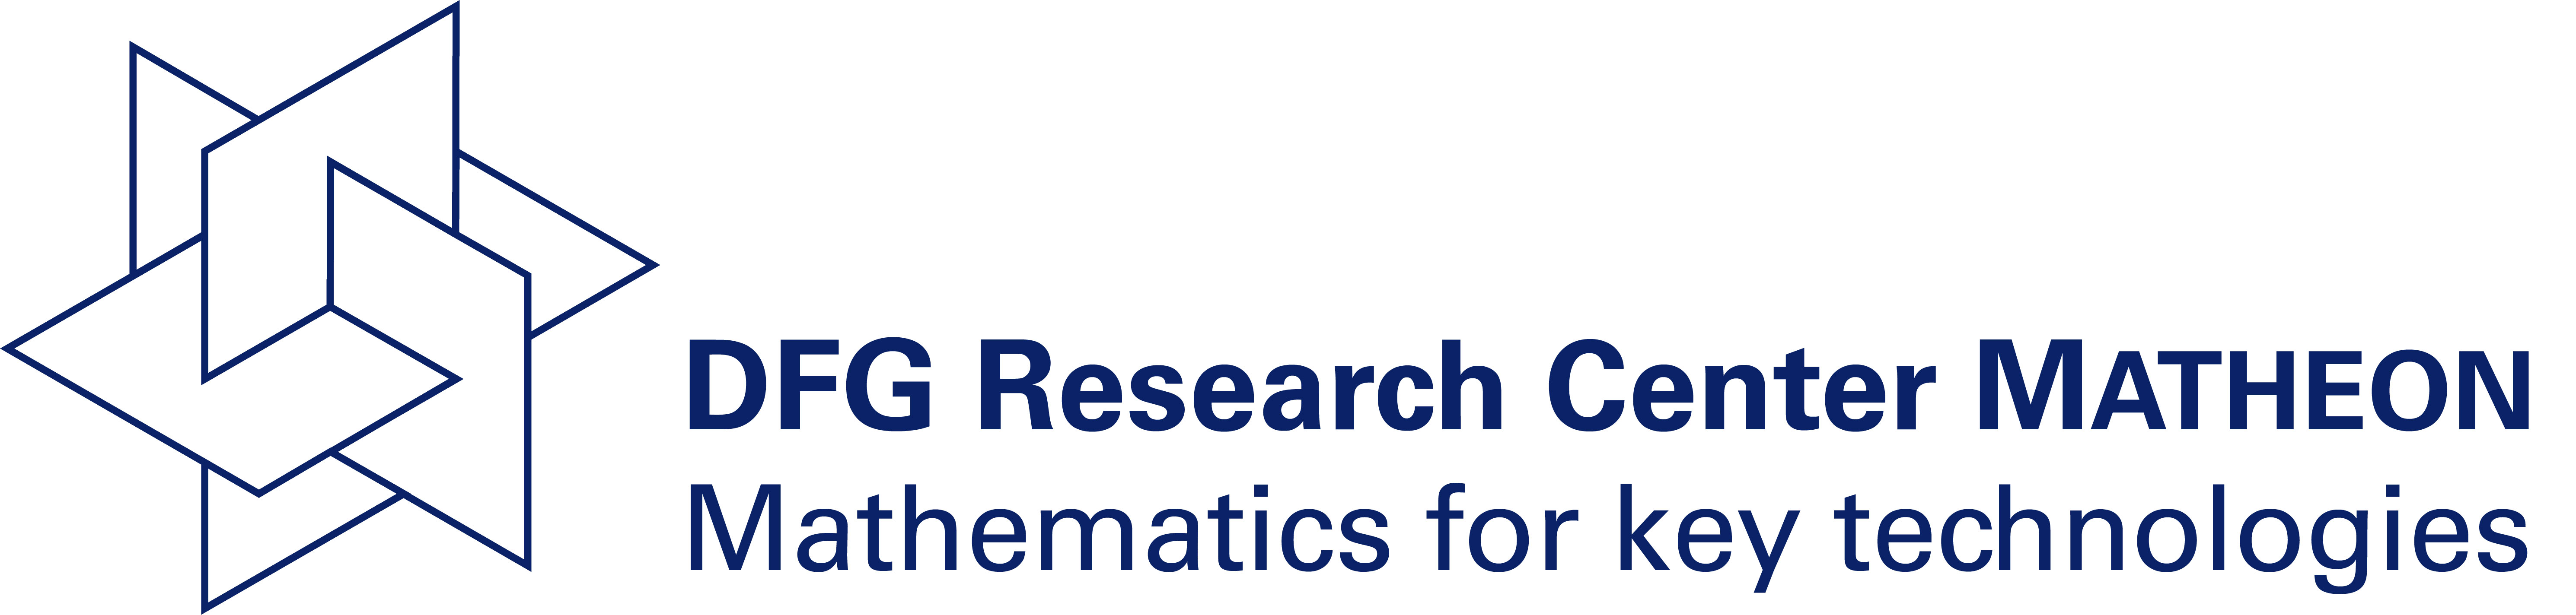 Logo: DFG Research Center MATHEON, Mathematics for key technologies